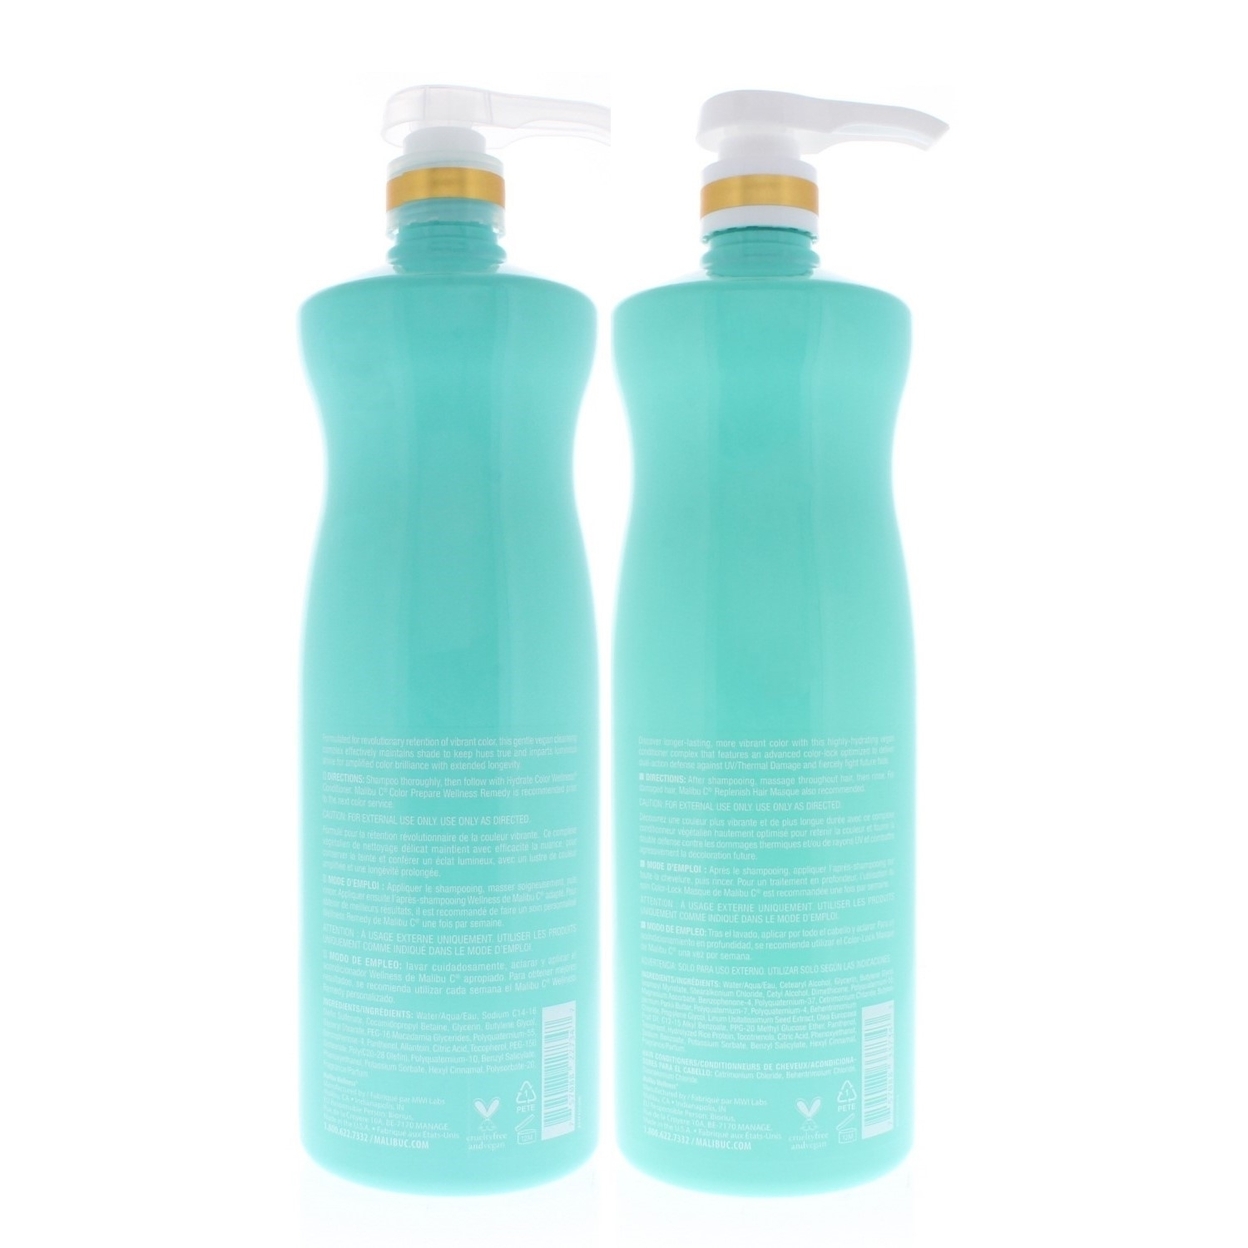 Malibu C Hydrate Color Wellness Shampoo And Conditioner 33.8oz/1 Liter Duo